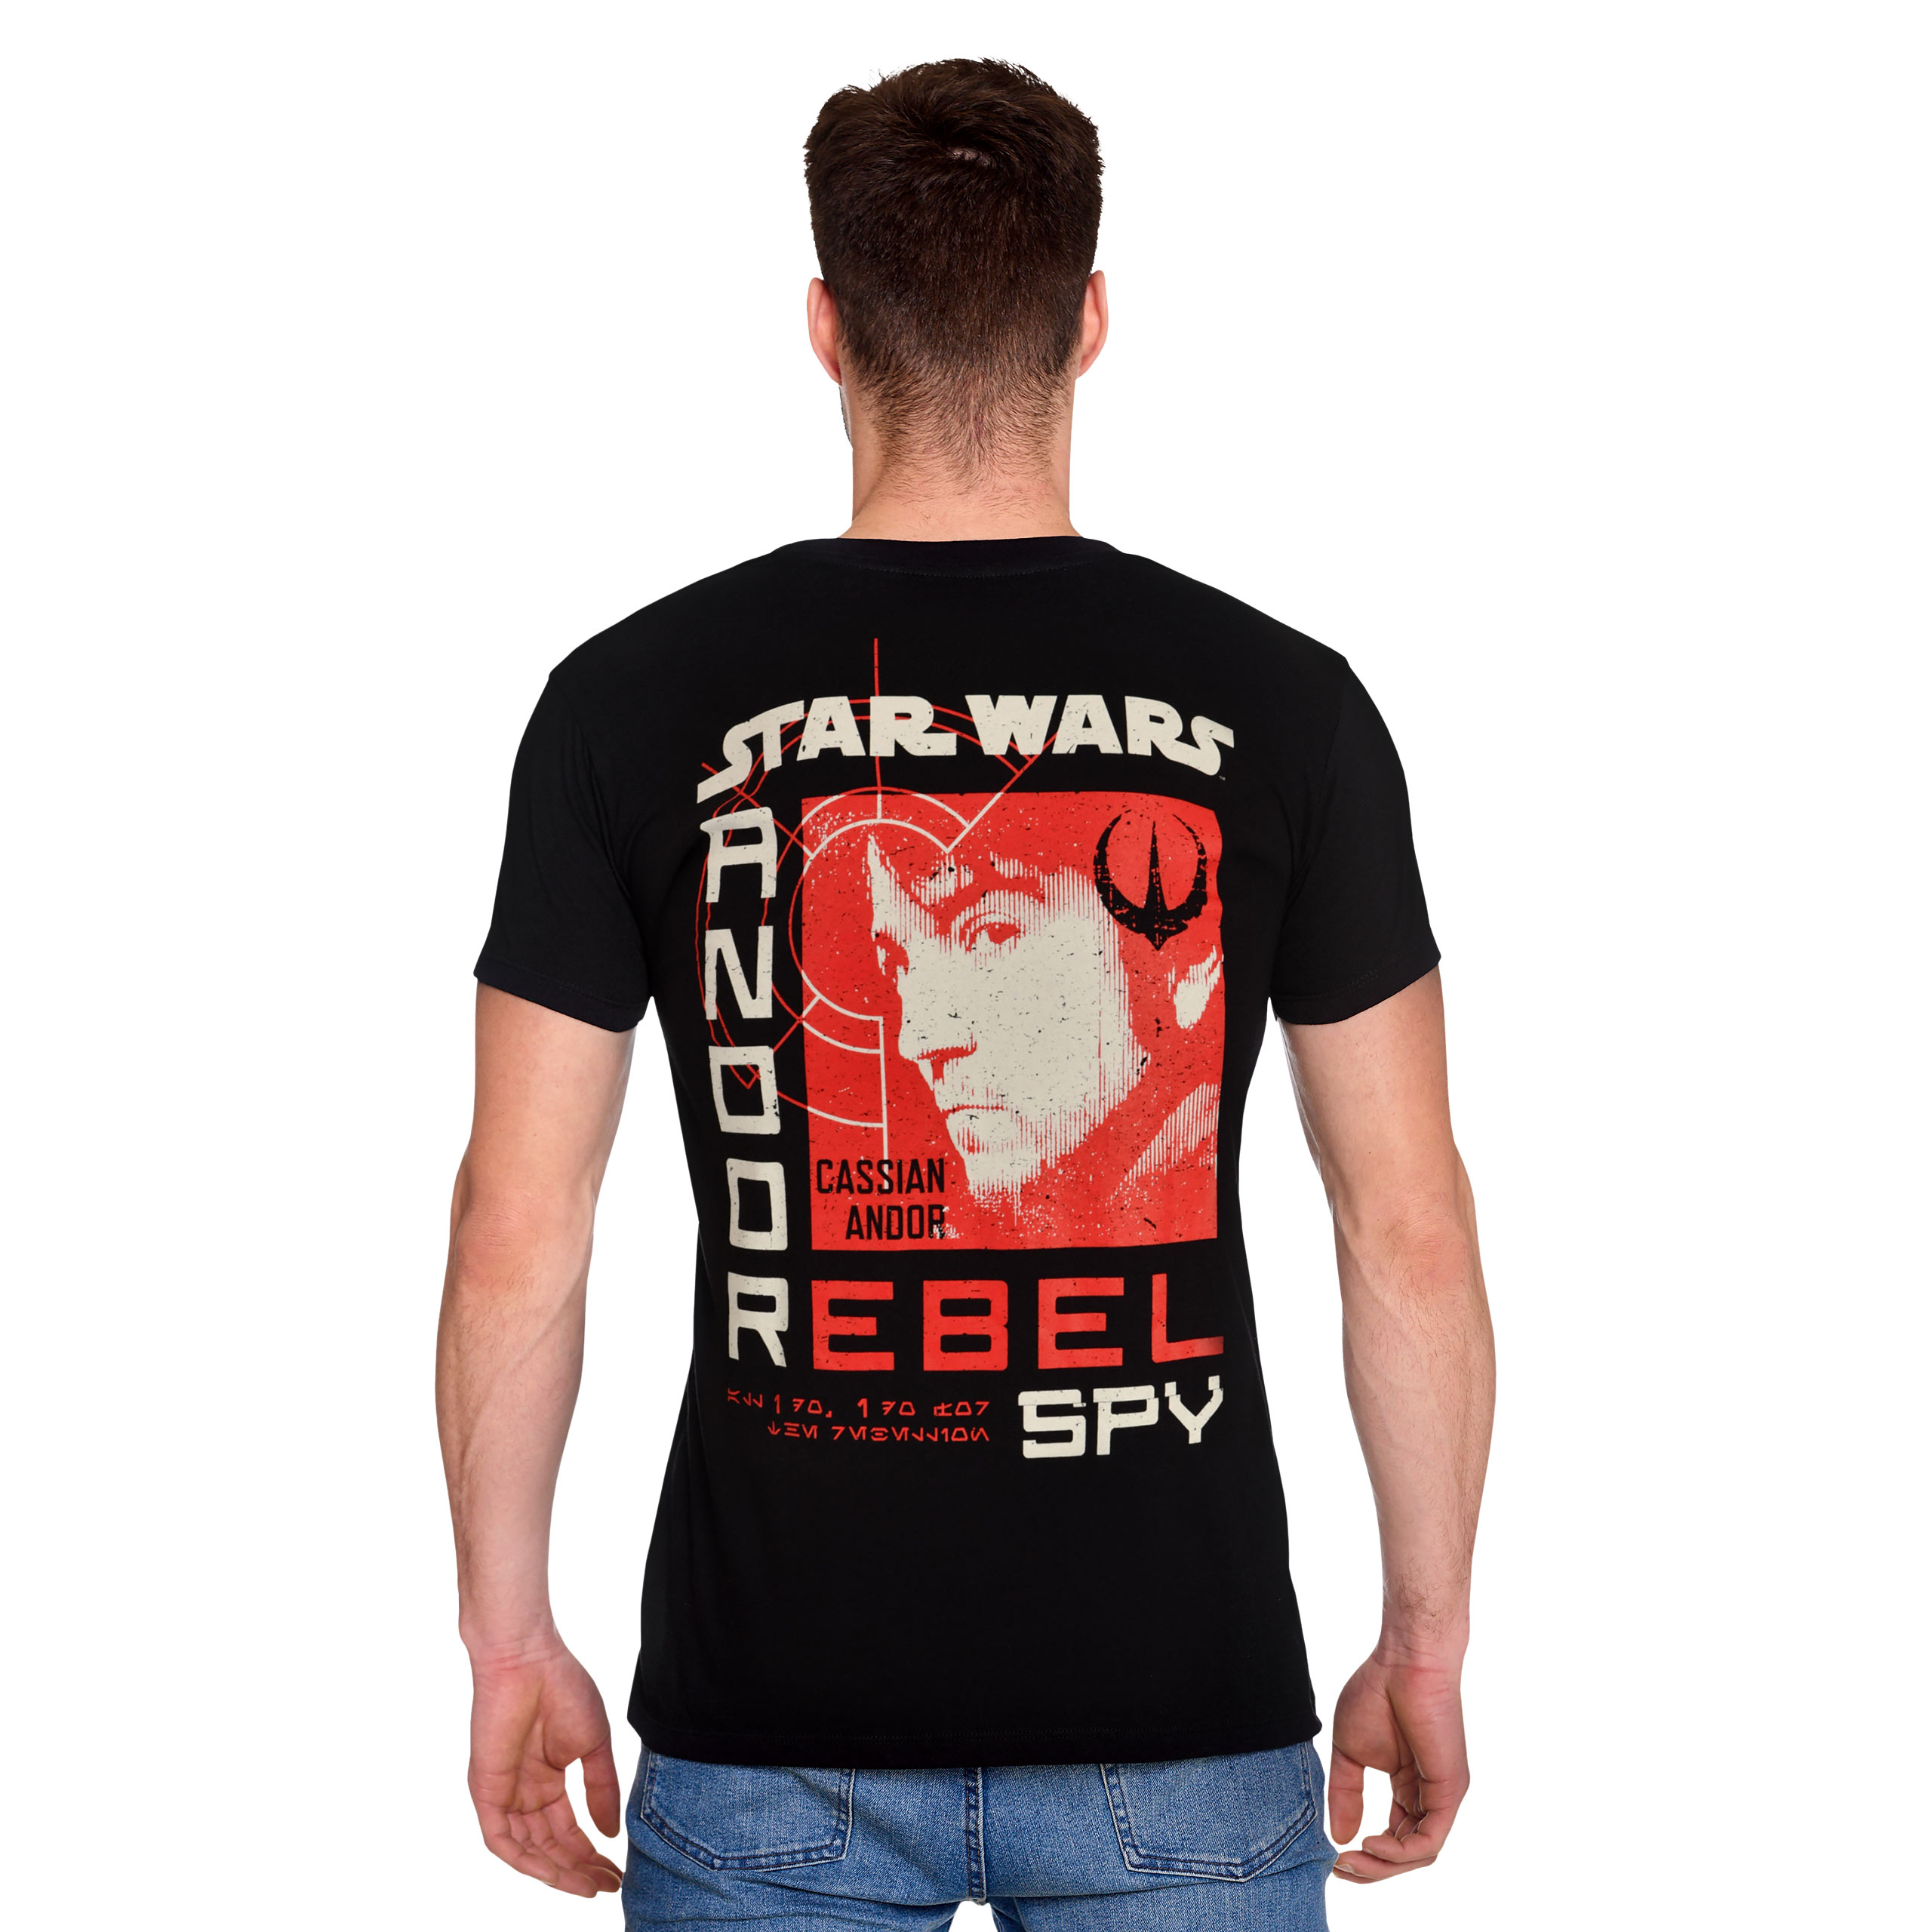 Star Wars - Andor Rebel Spy T-Shirt Zwart